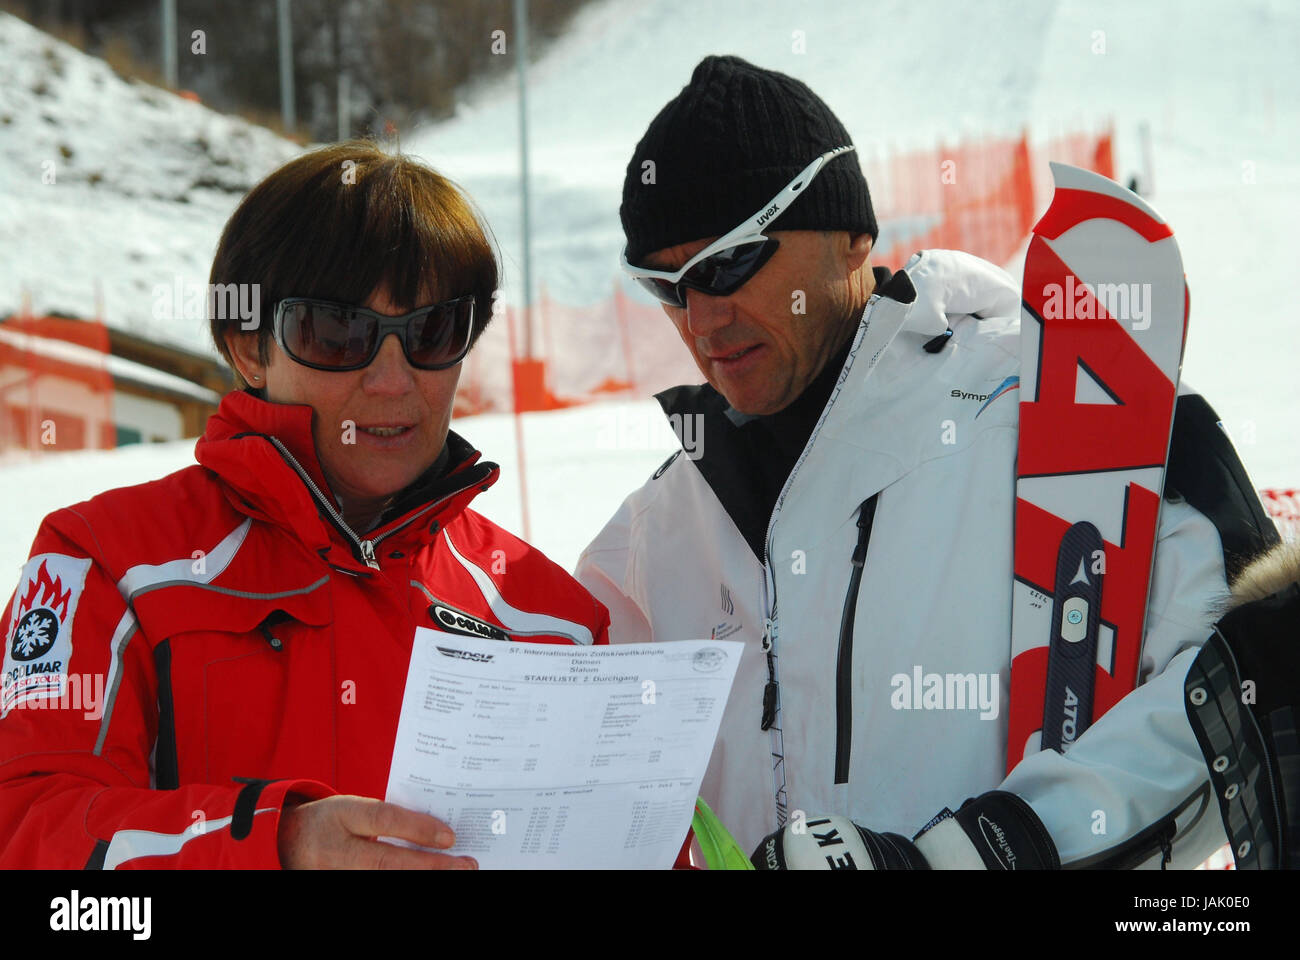 Winter sports,Rosi Mittermaier,Christian Neureuther,ski clothes,portrait, Stock Photo